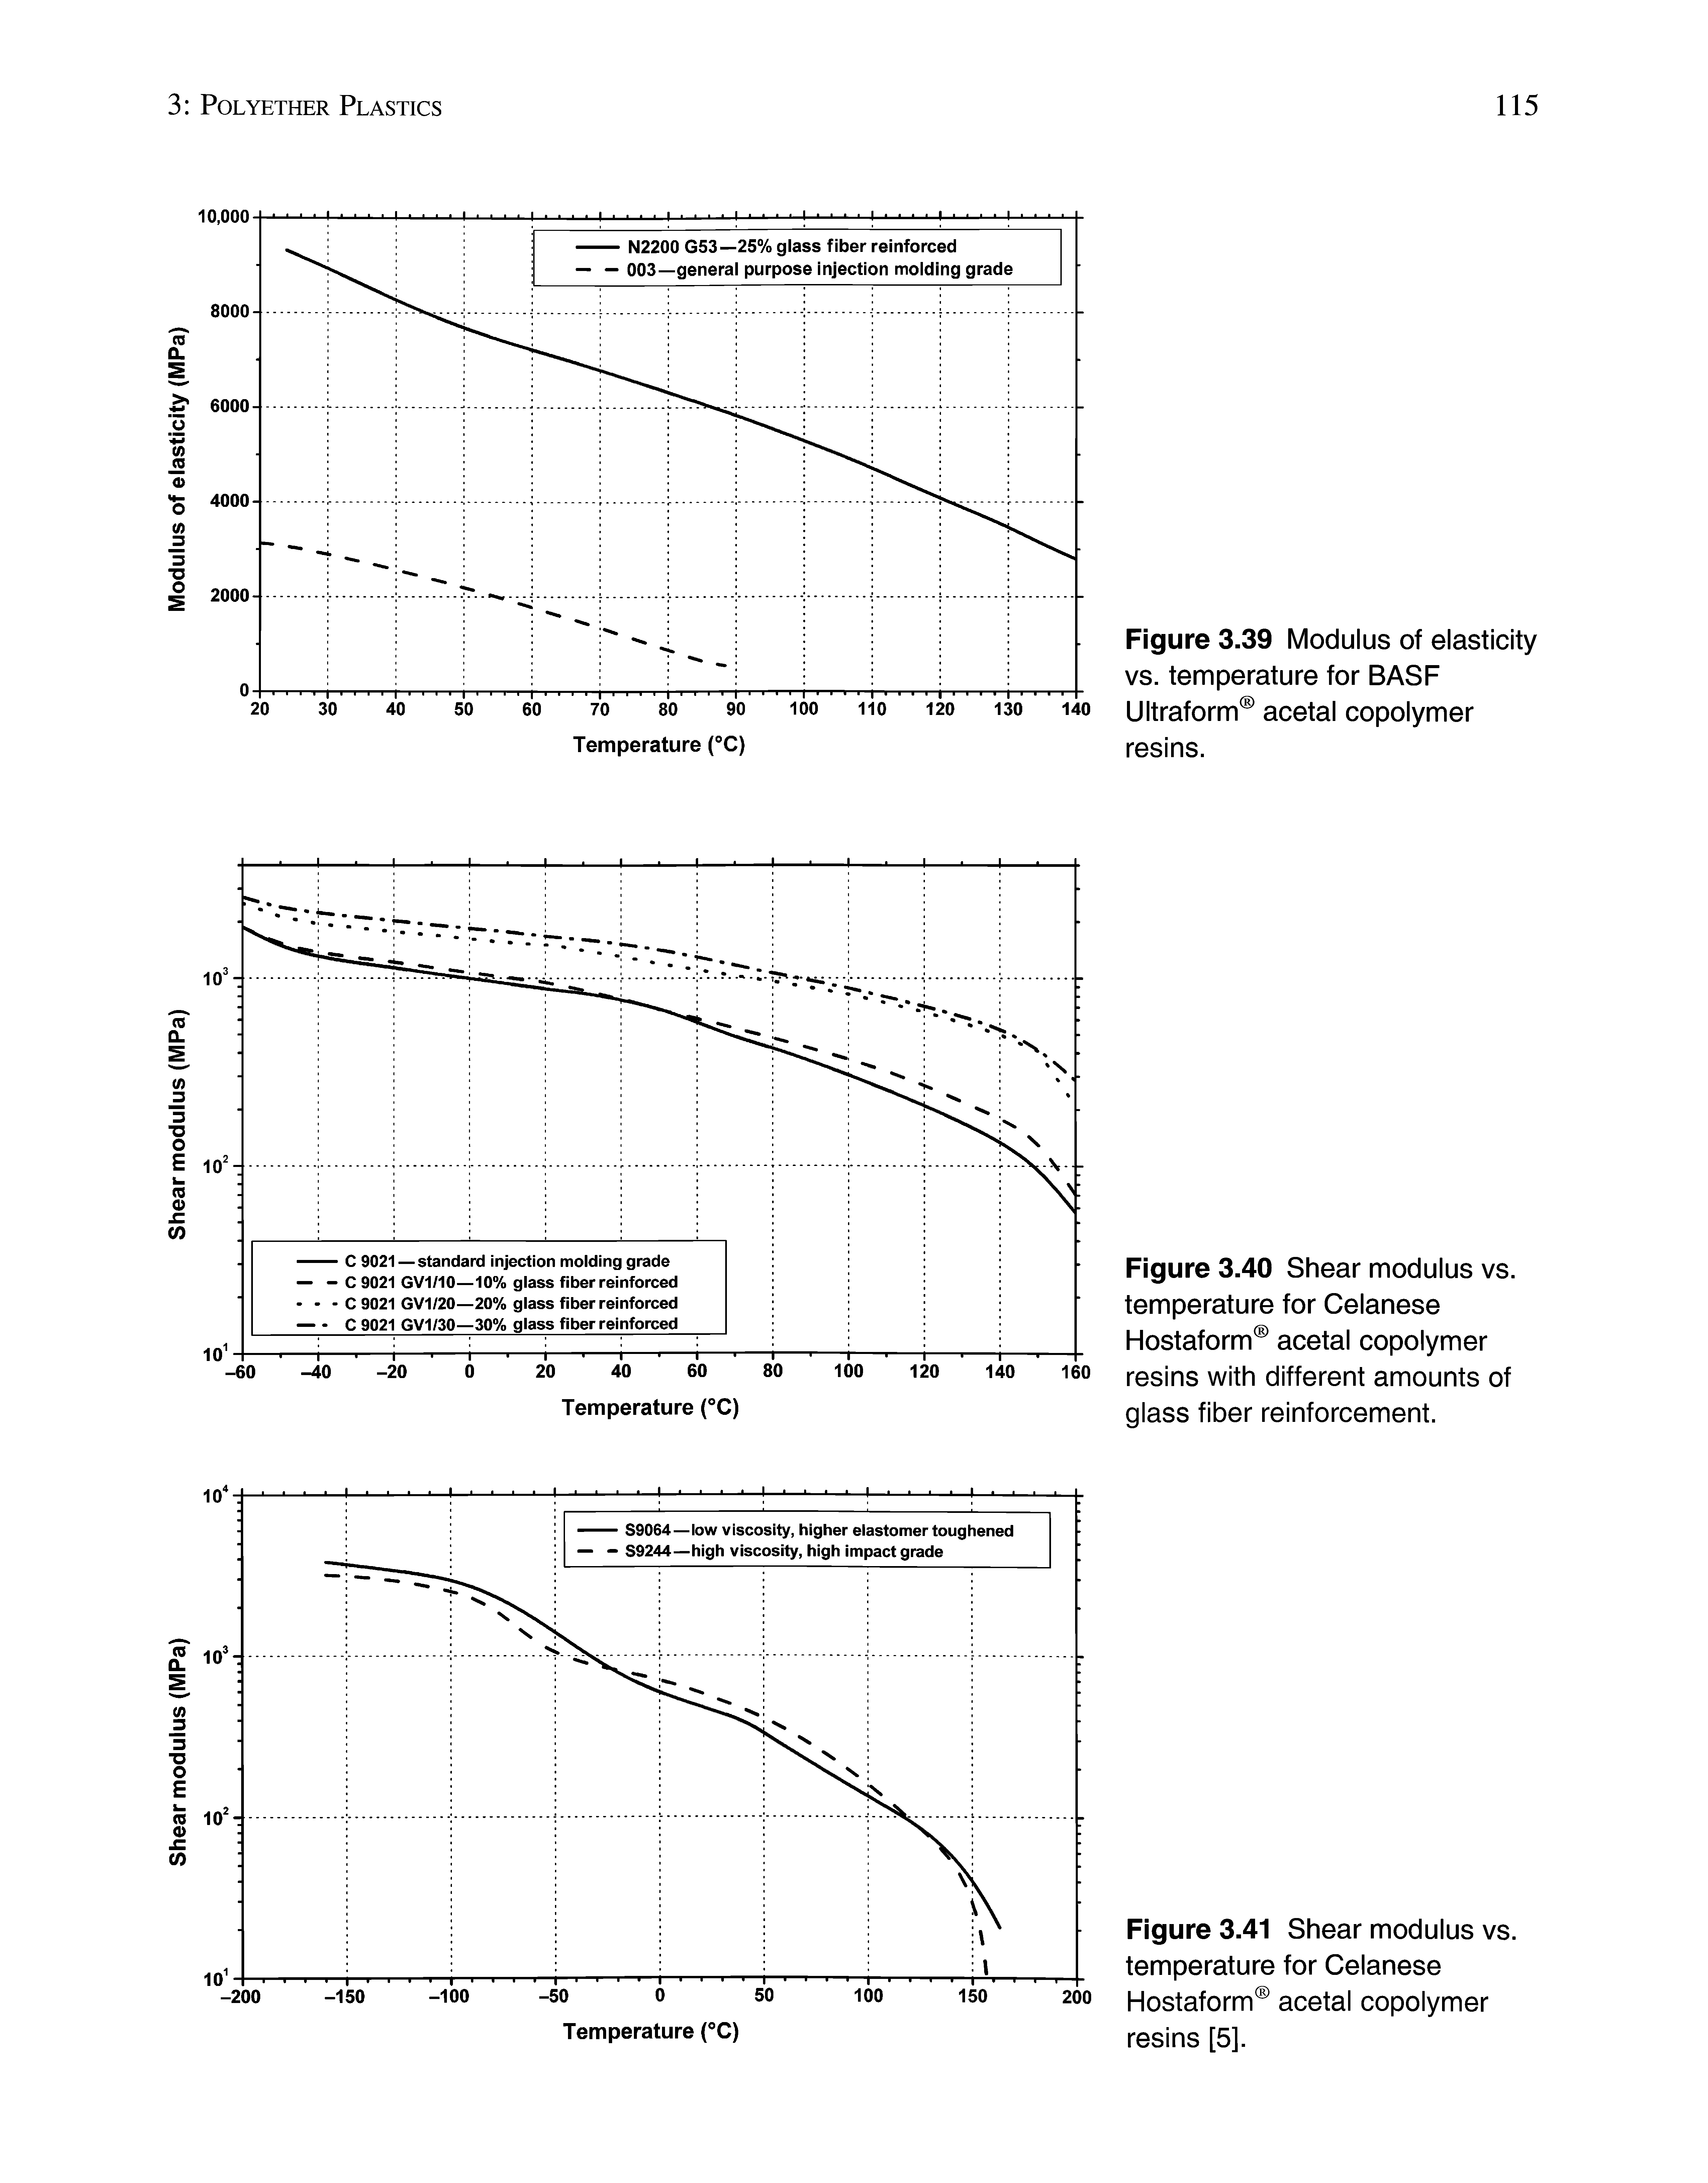 Figure 3.40 Shear modulus vs. temperature for Celanese Hostaform acetal copolymer resins with different amounts of glass fiber reinforcement.